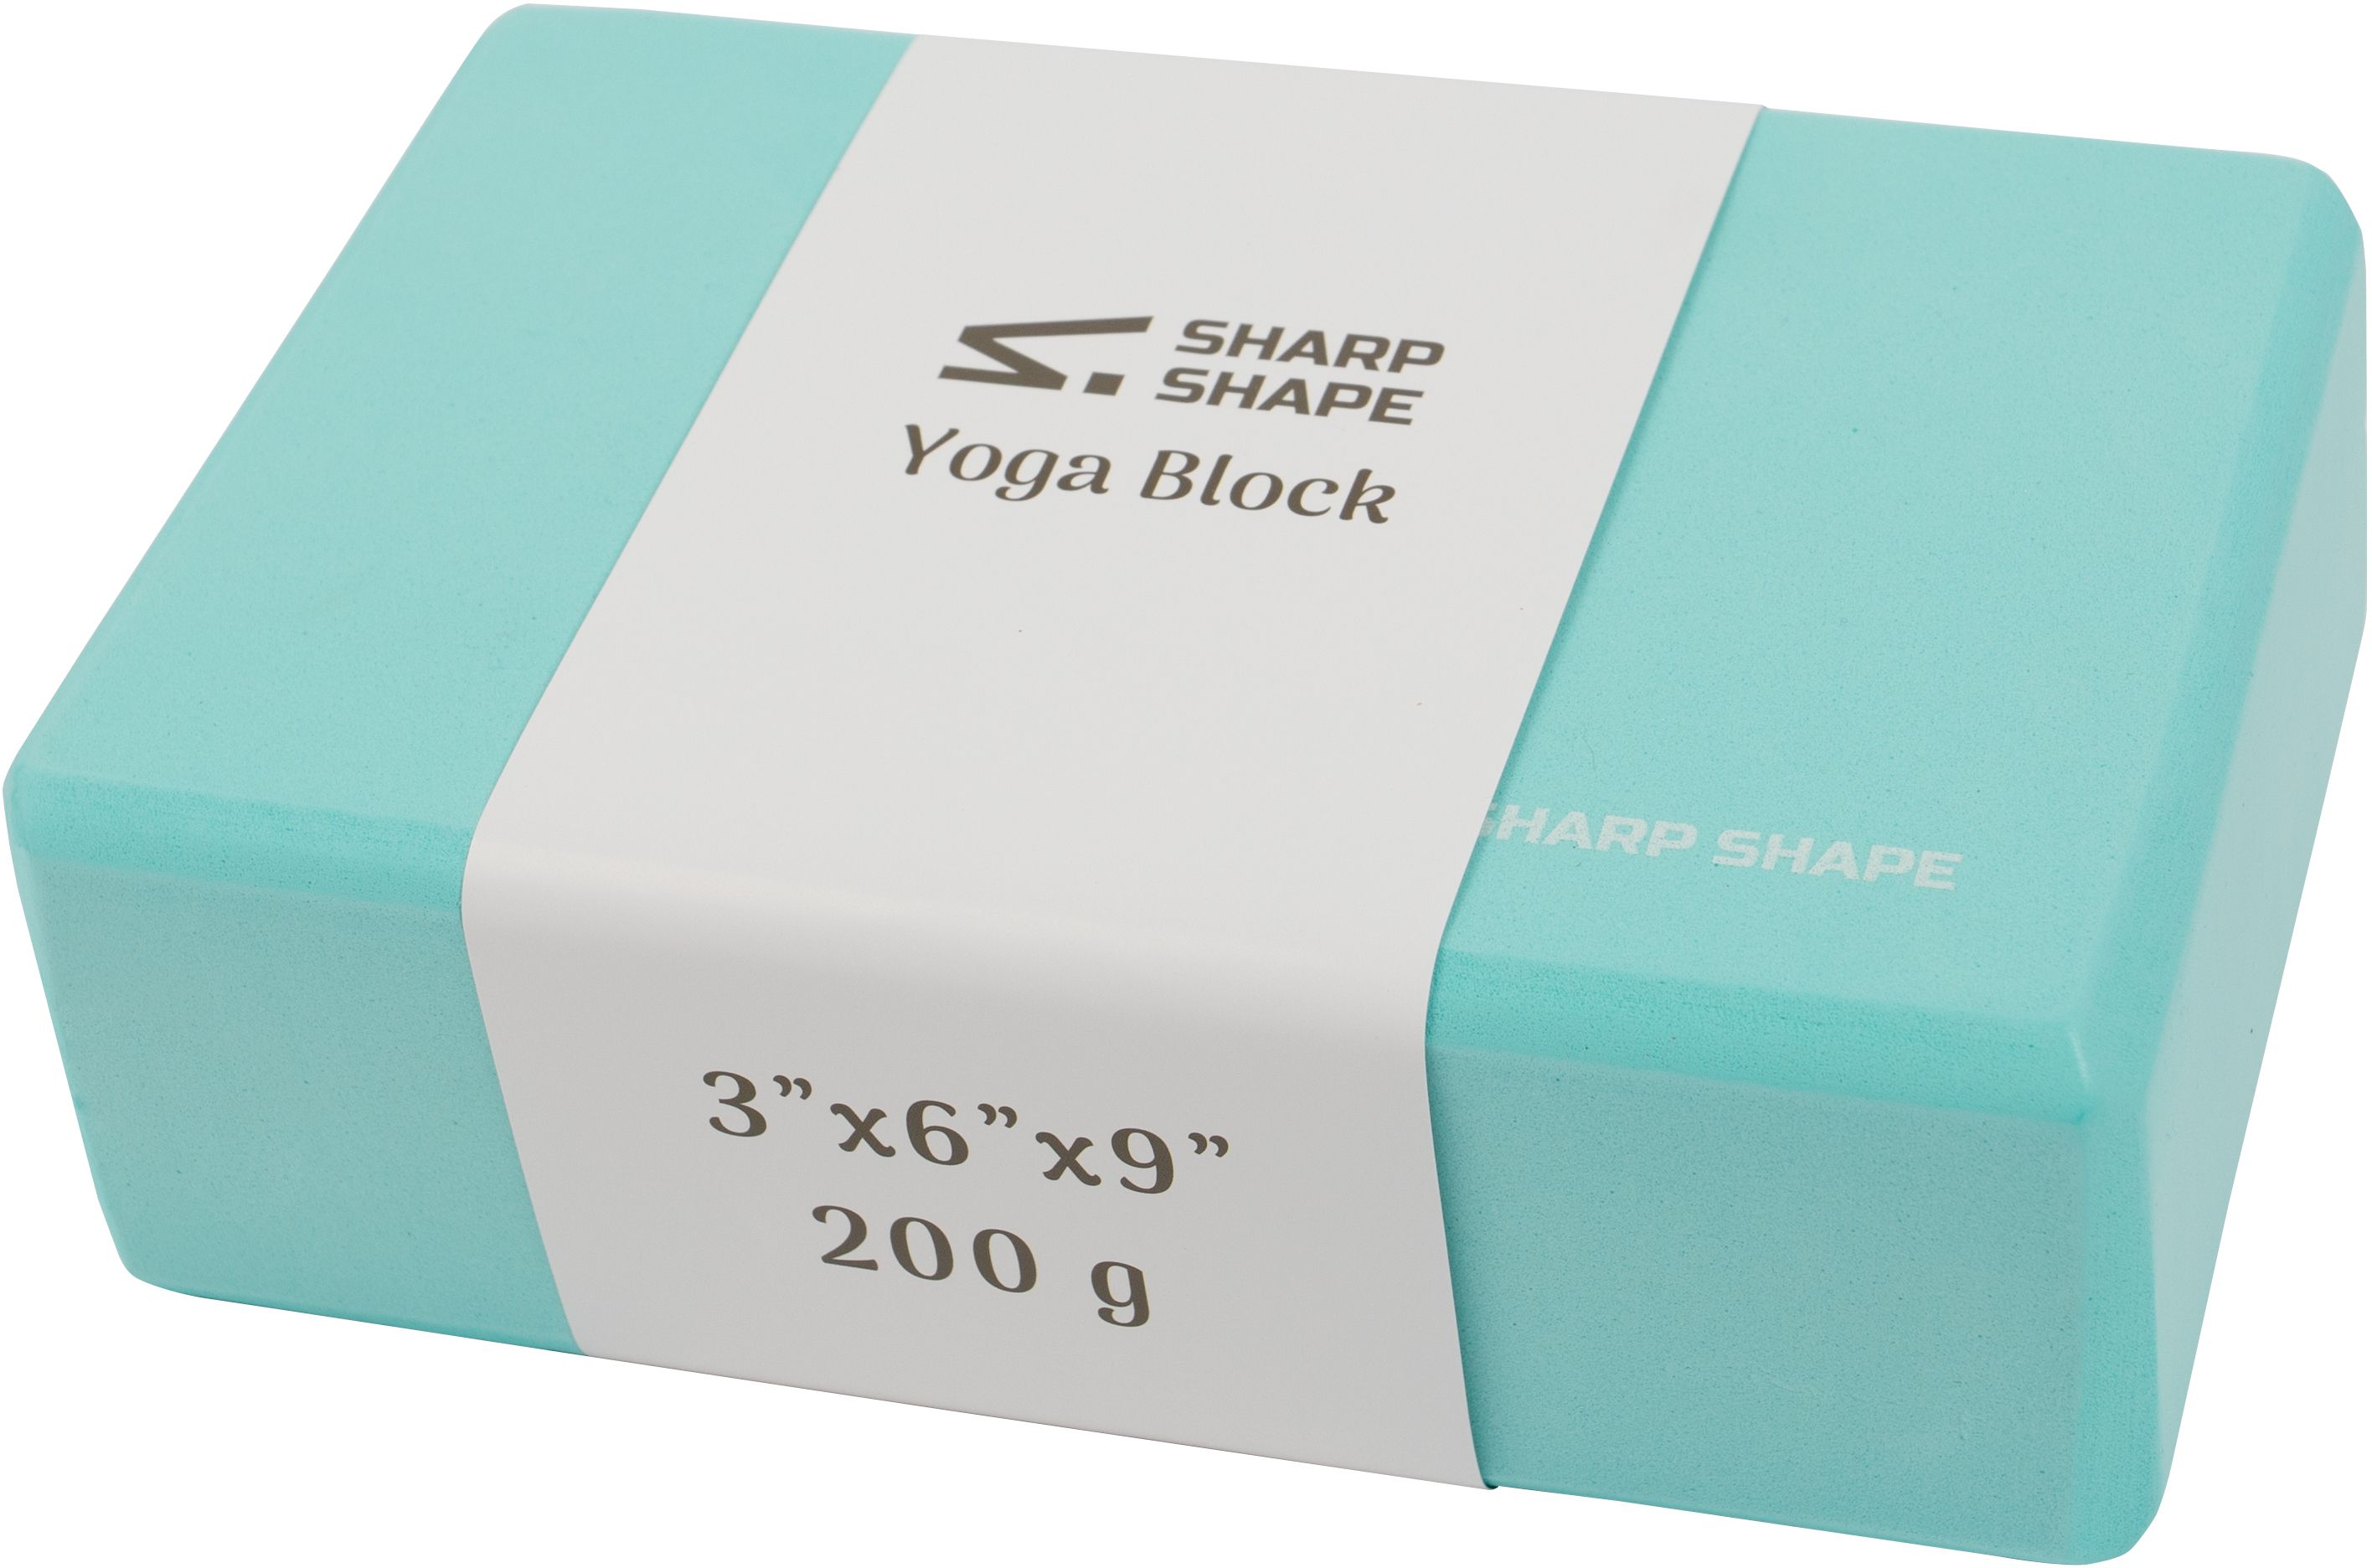 Yoga block